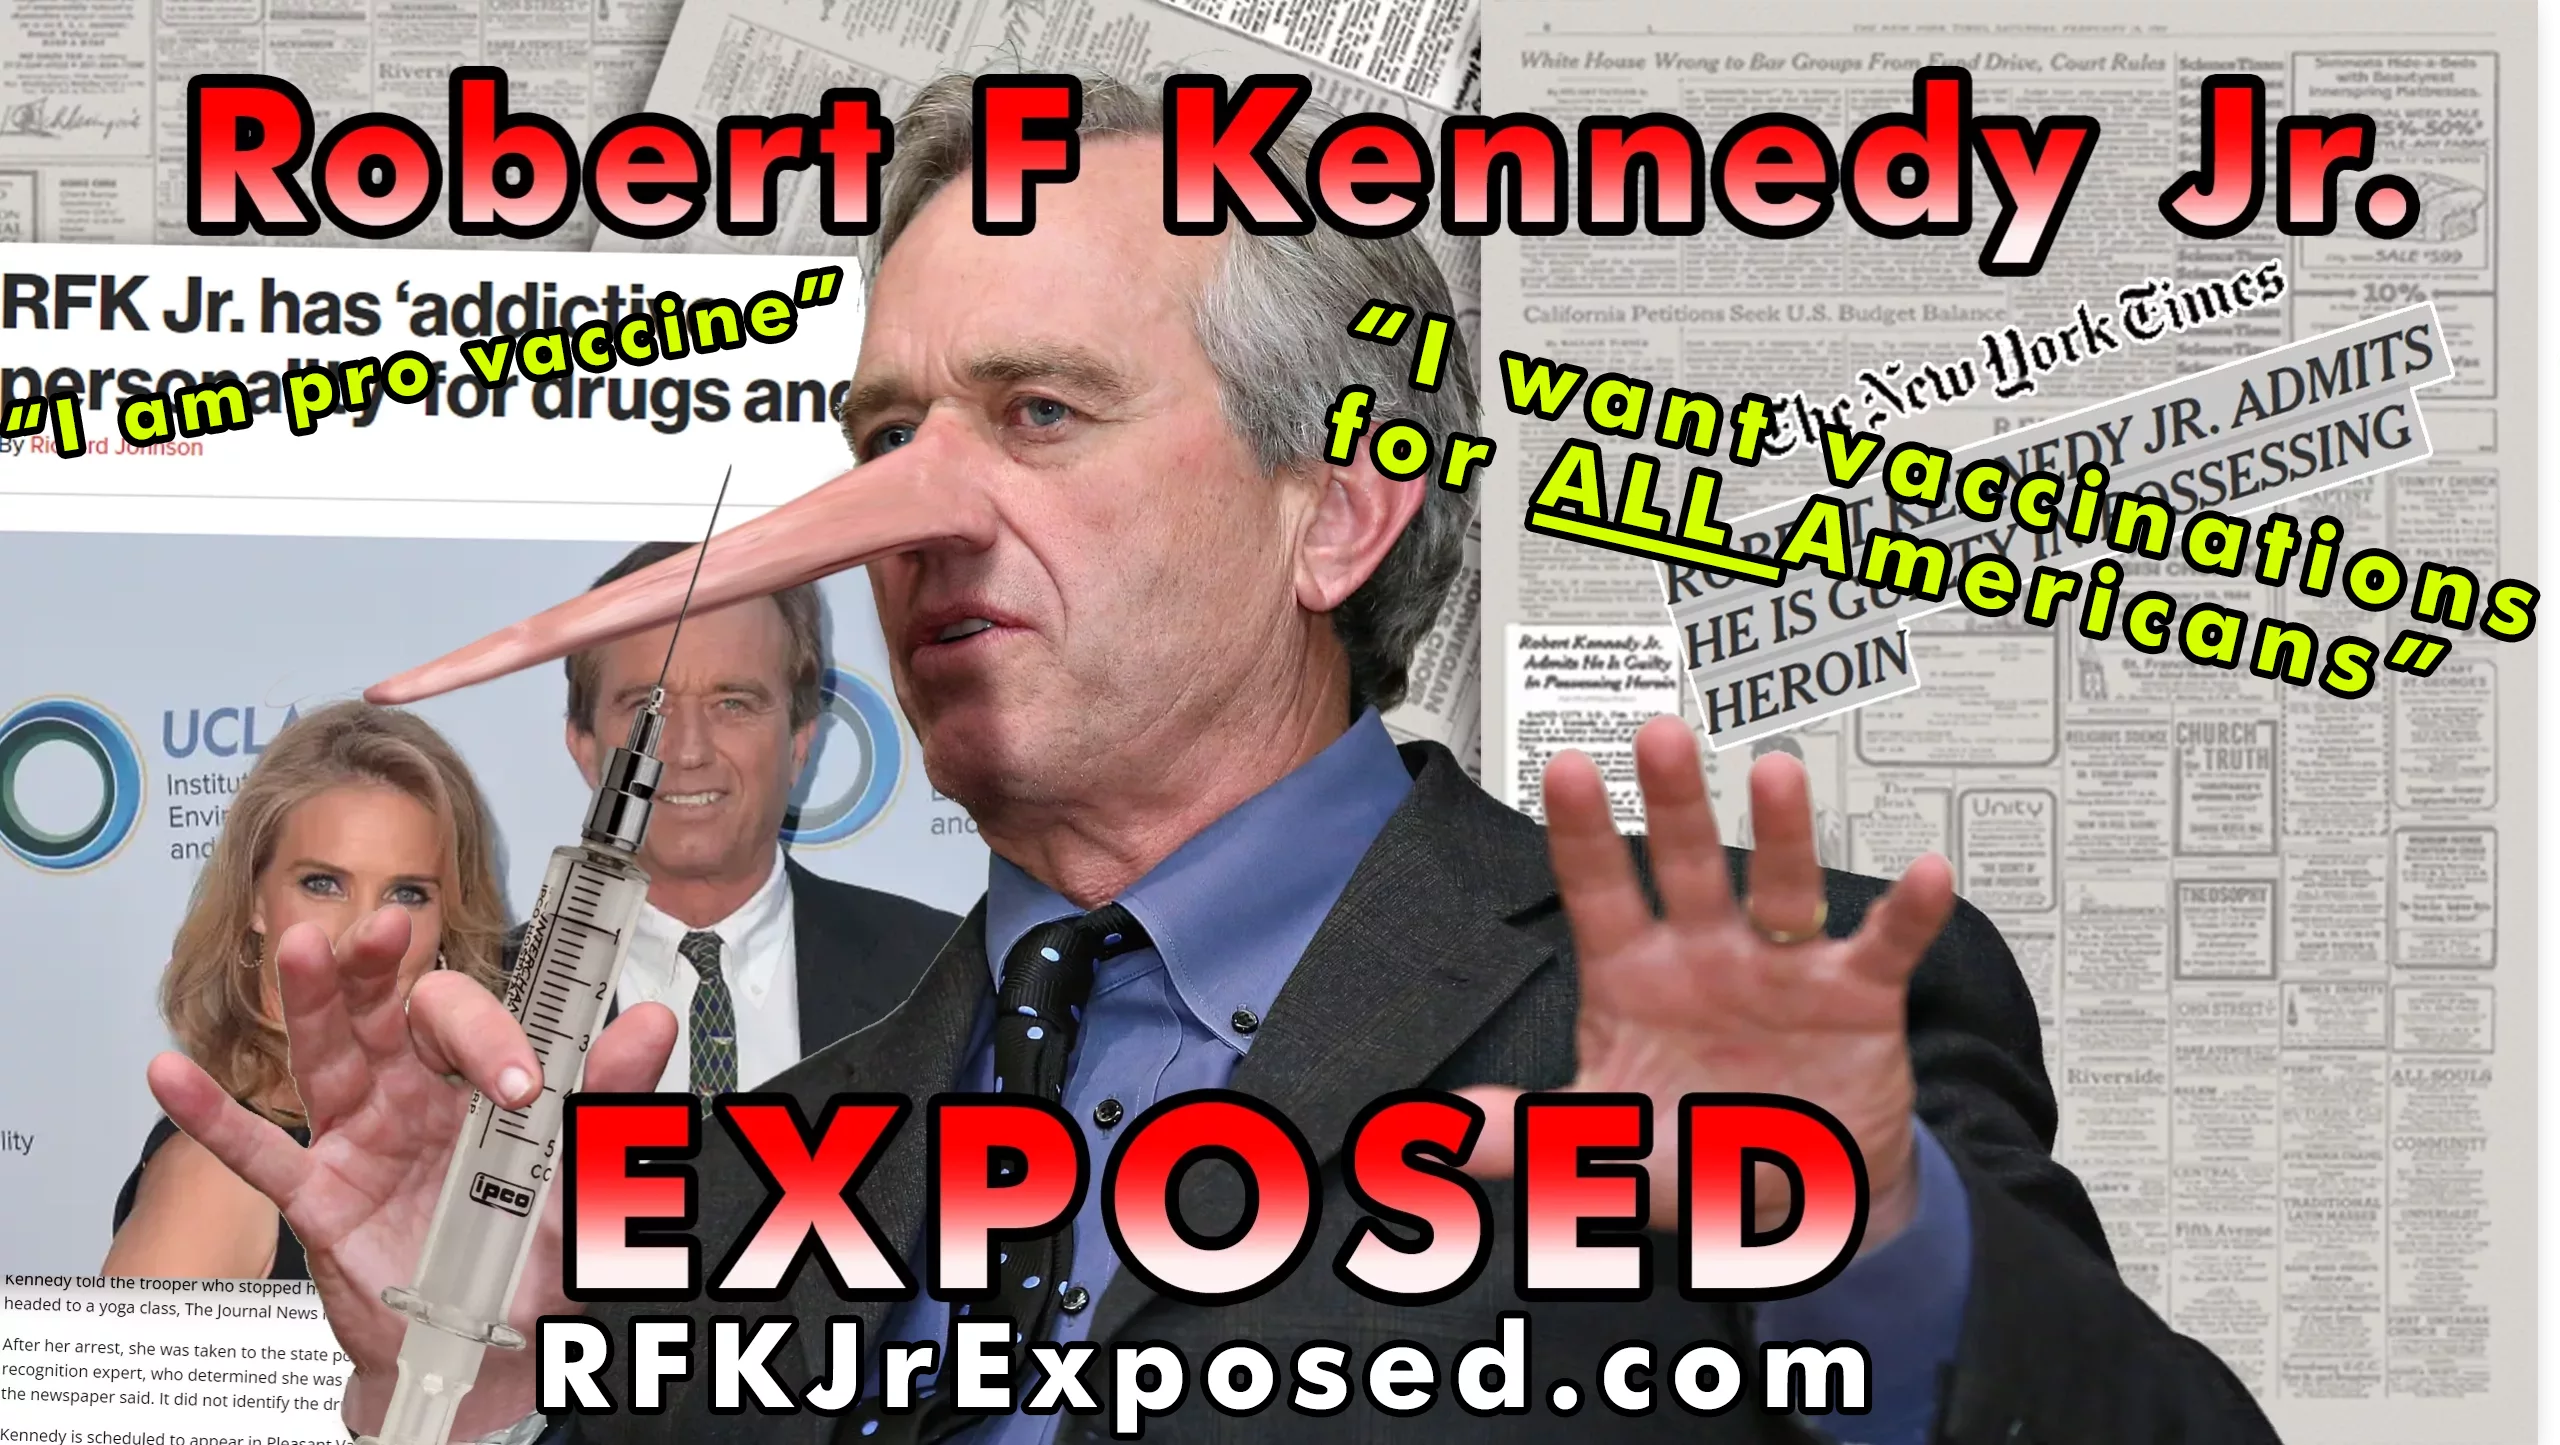 robert kennedy jr. exposed website